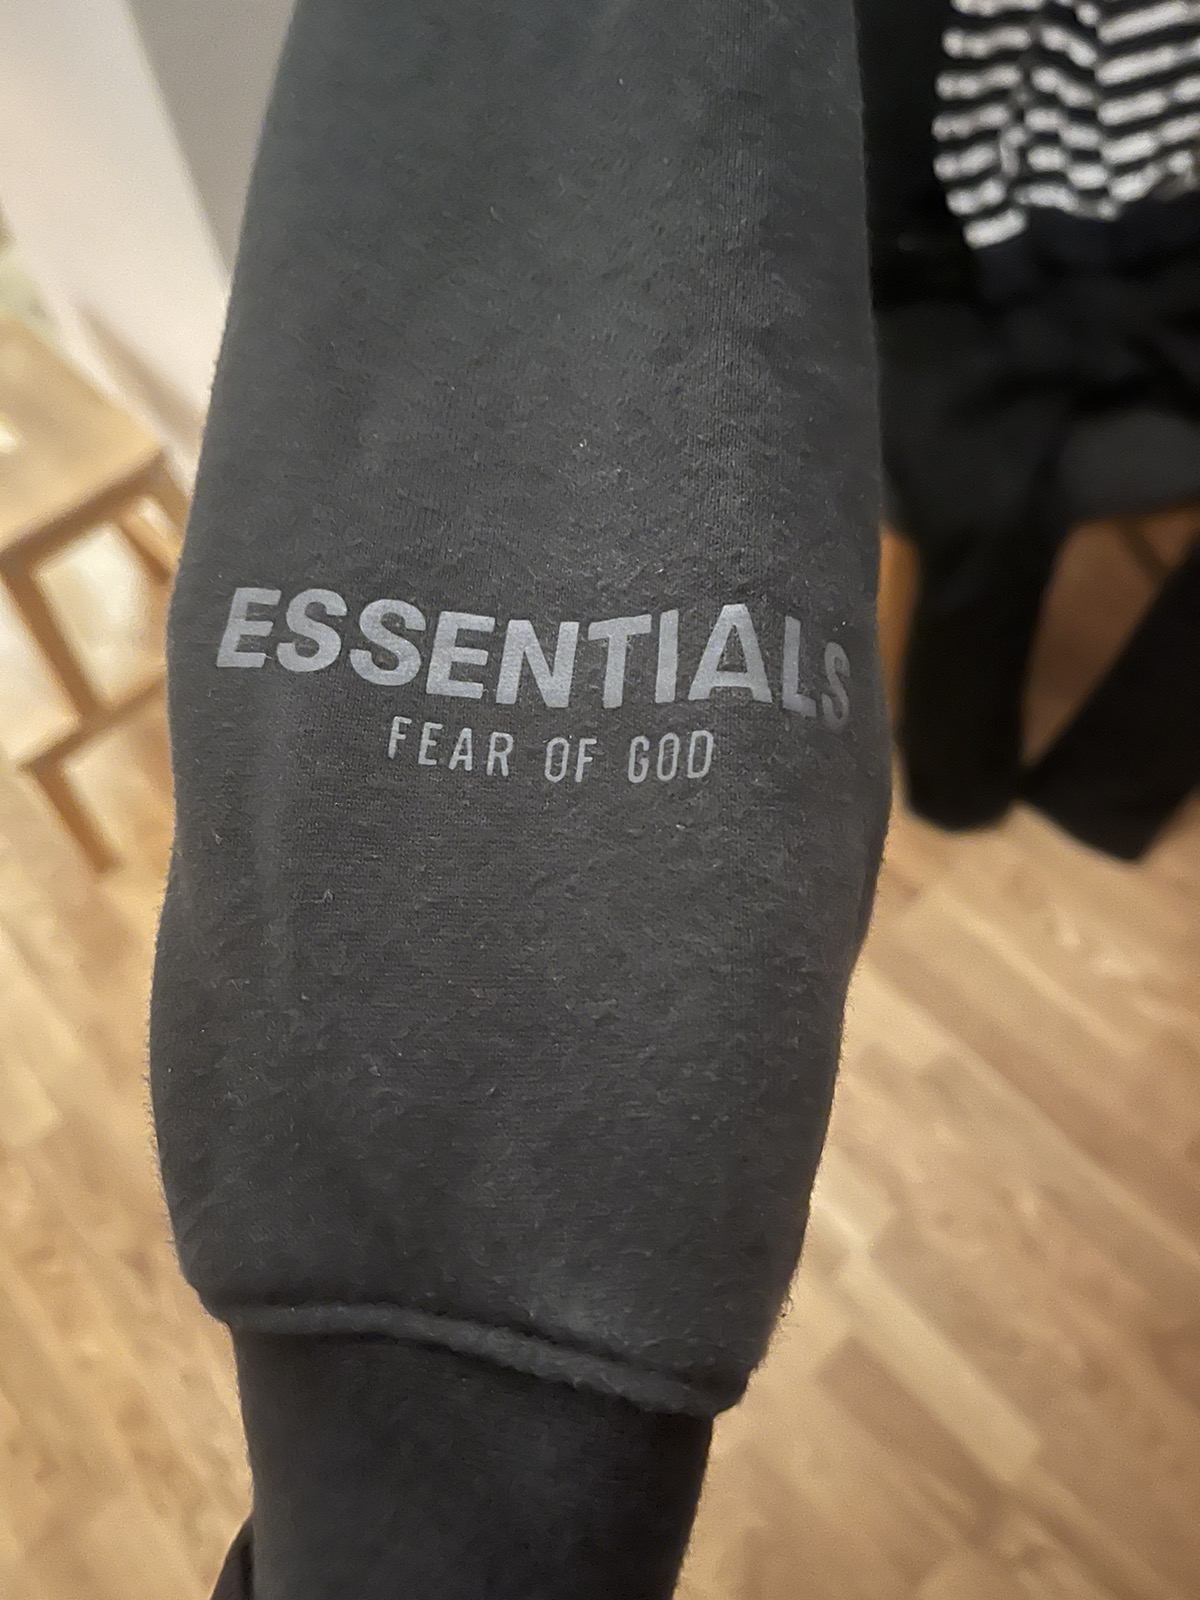 Fear of god (Essentials) - 2